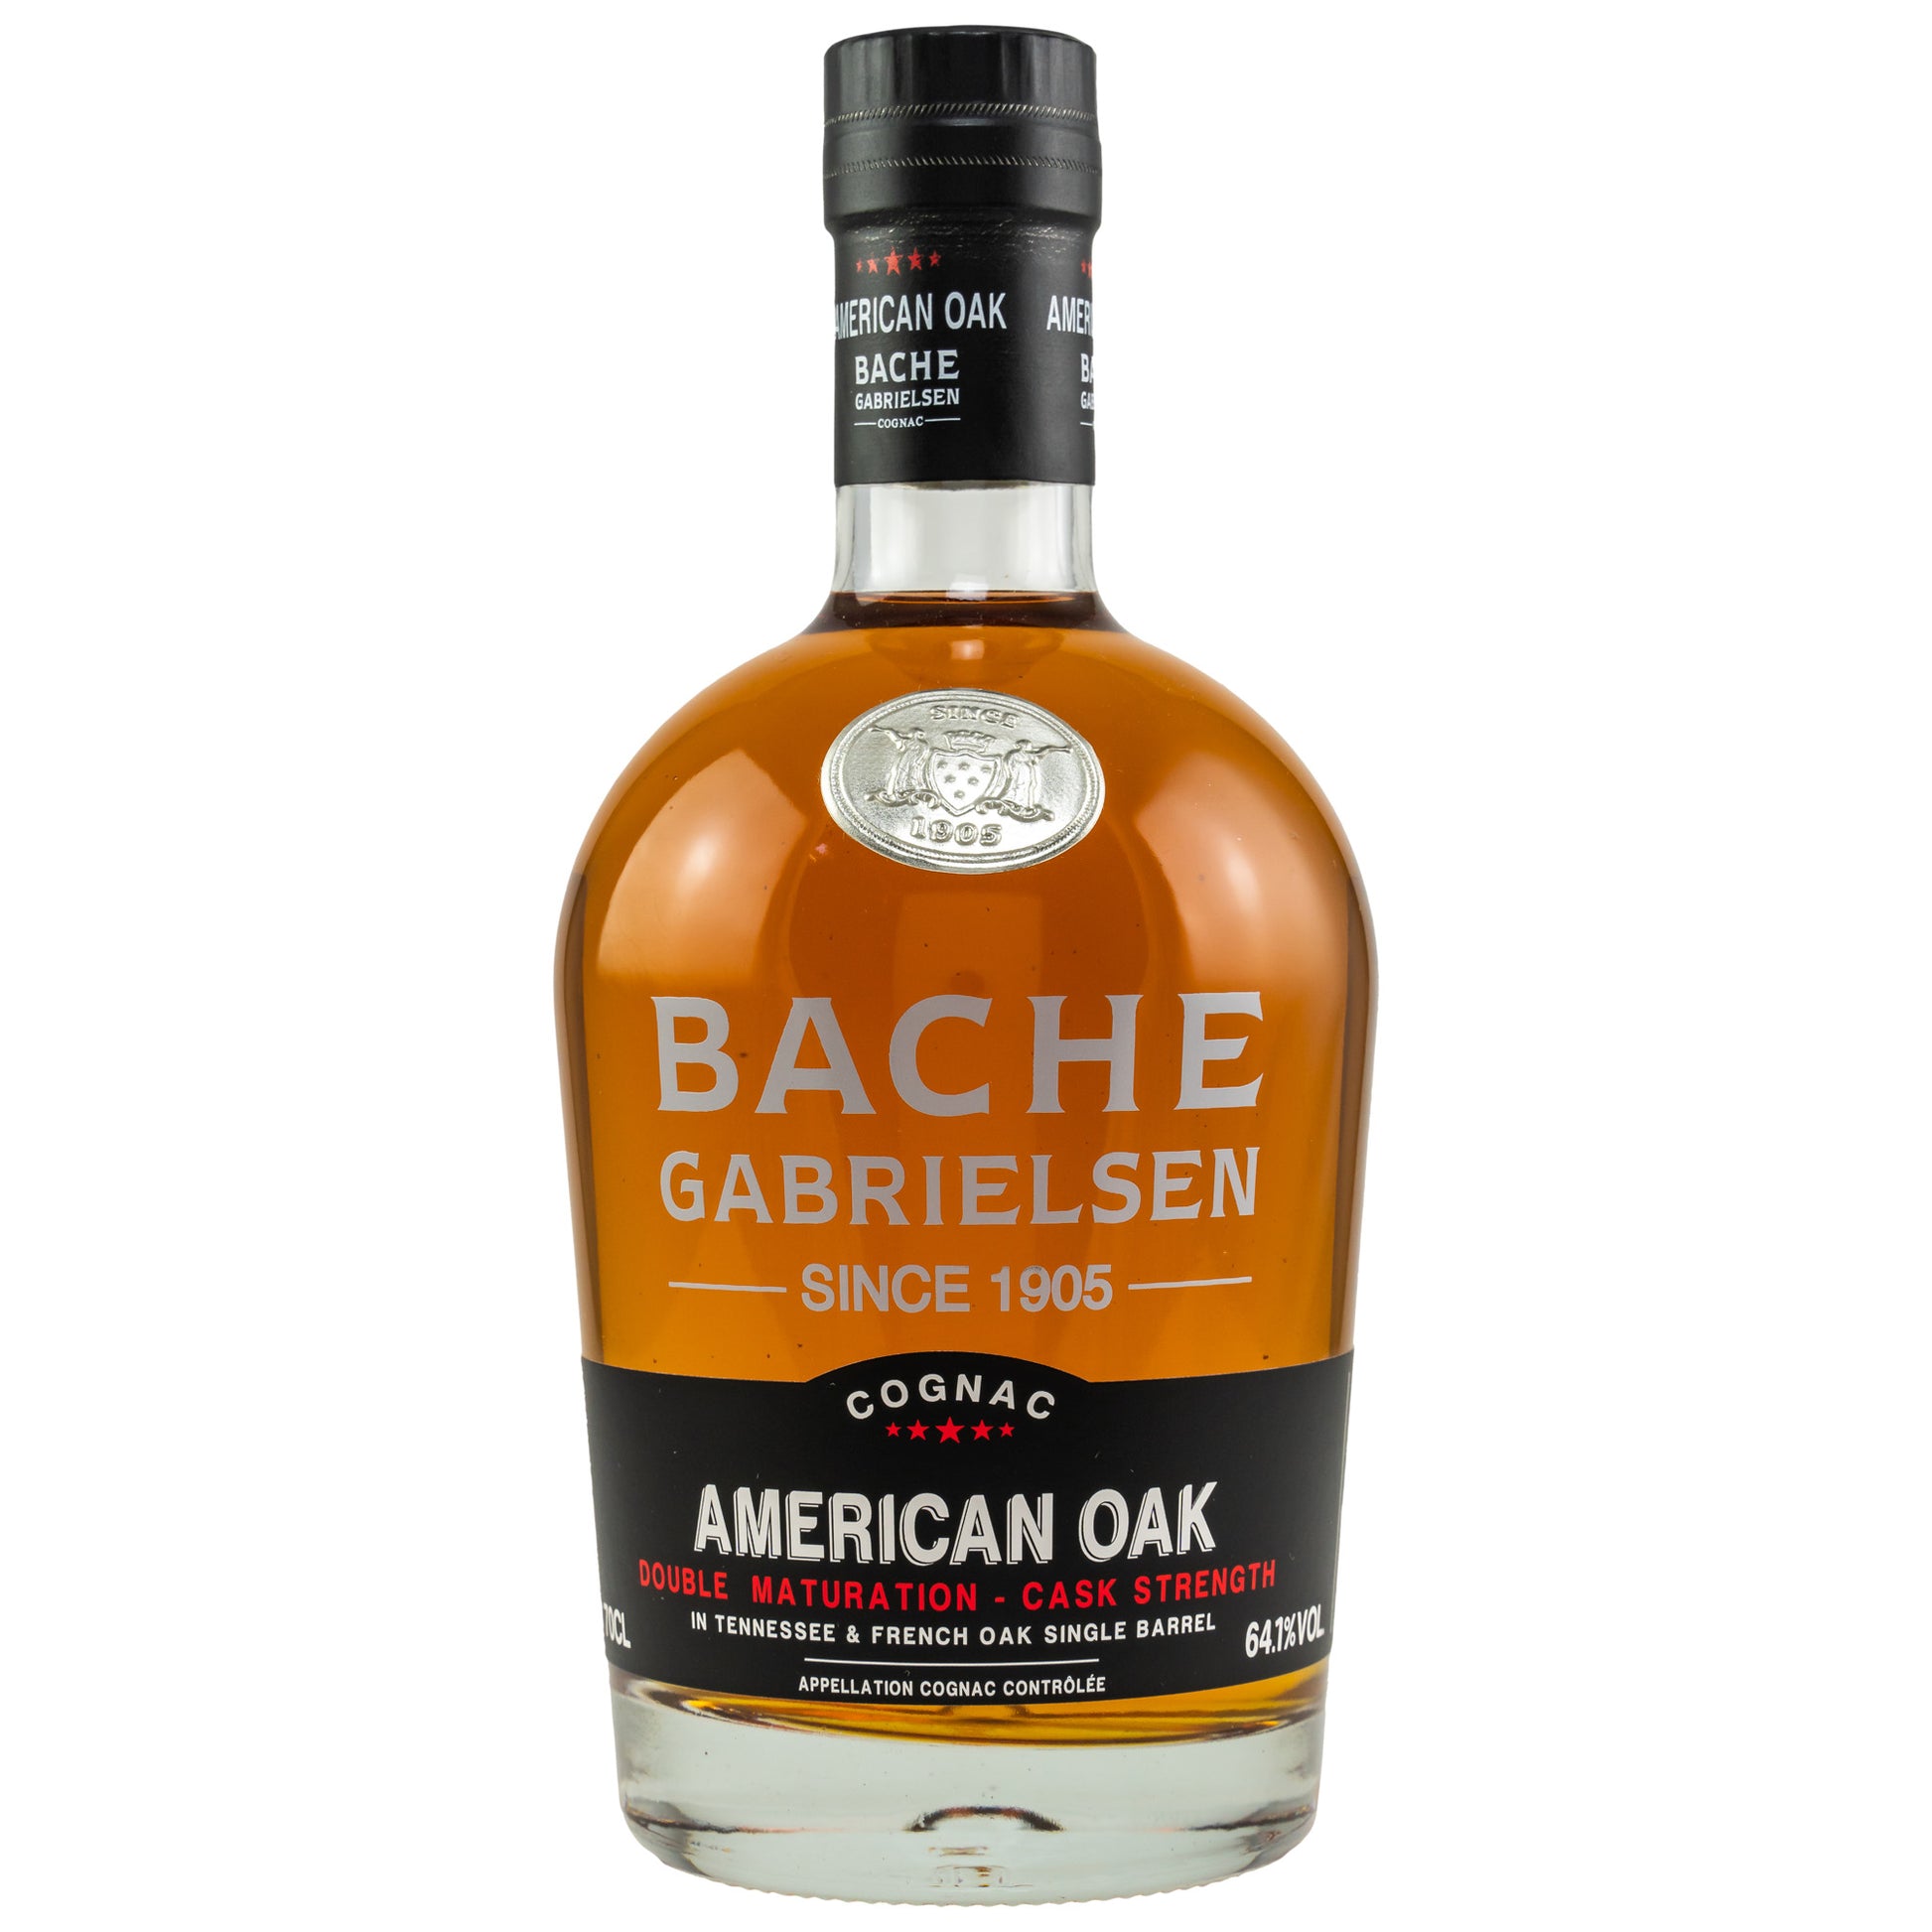 Bache Gabrielsen Cognac American Oak